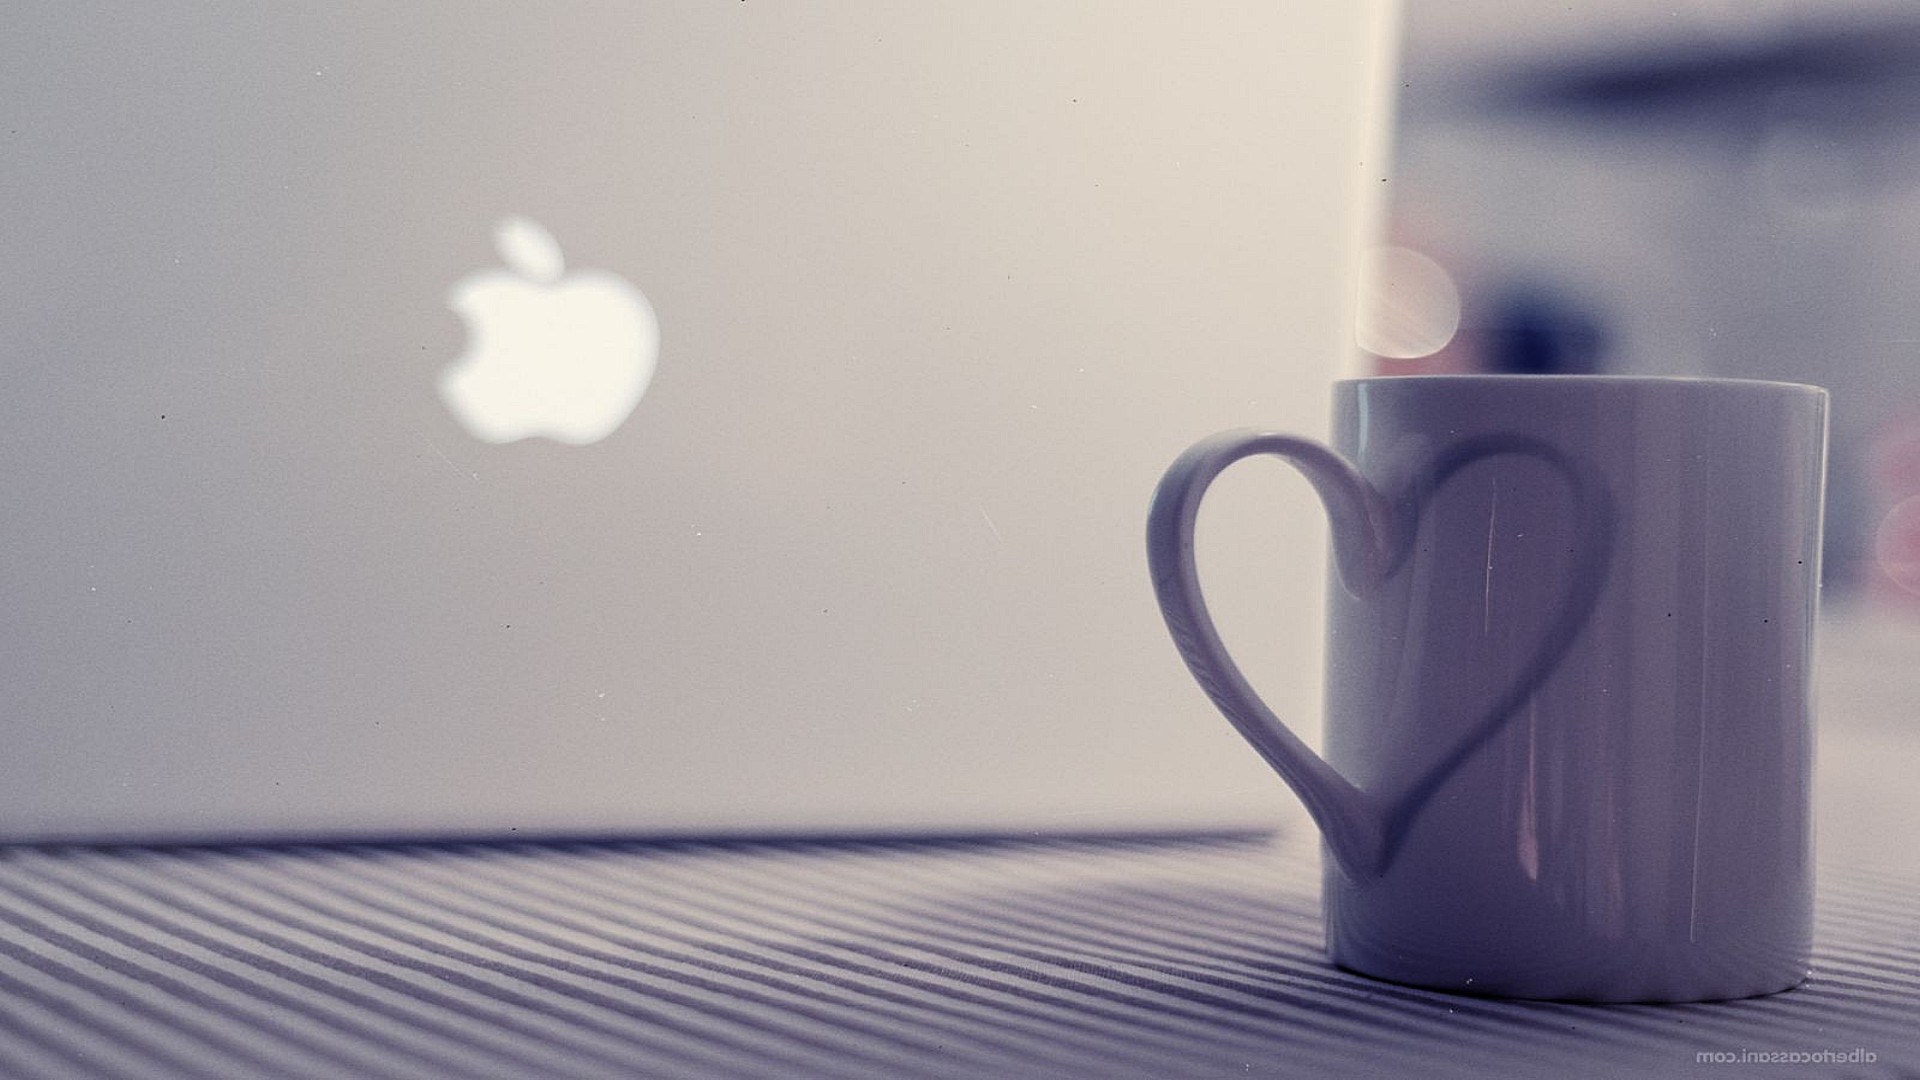 apple desktop cup drink coffee abstract color mug empty still life dawn close-up tea blank design background espresso